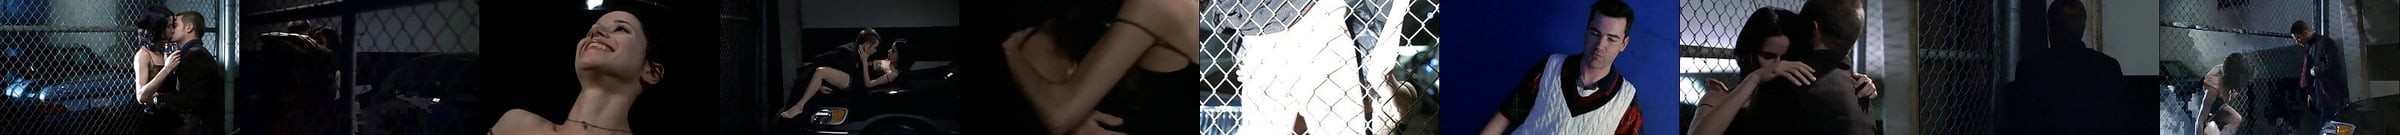 Diora Baird Hot Sex Scene In Cocked Series Xhamster 